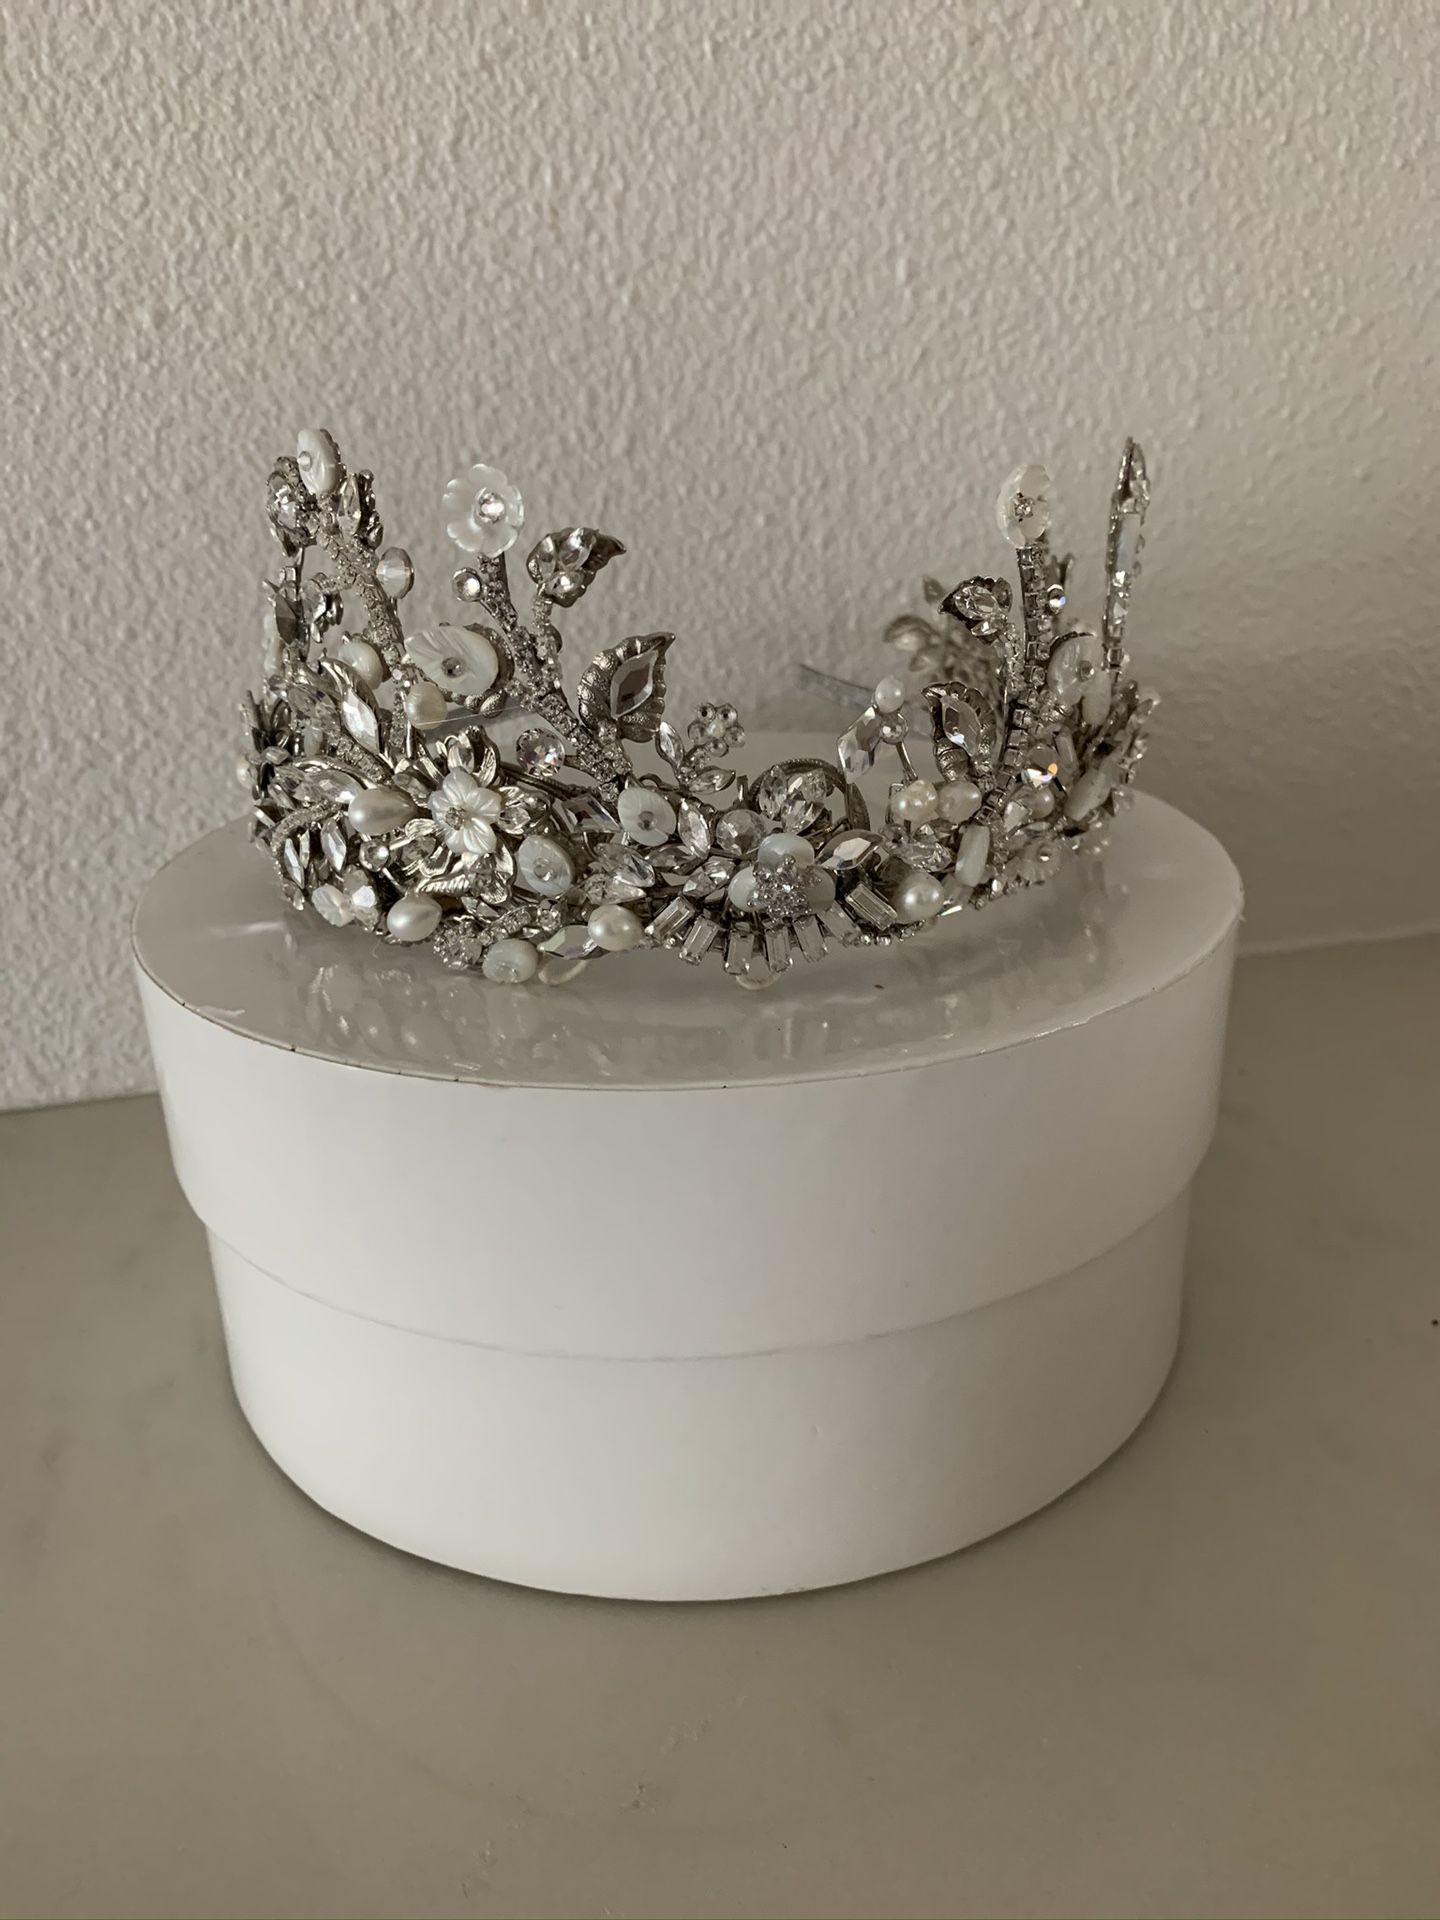 Bridal tiara or headband for bride